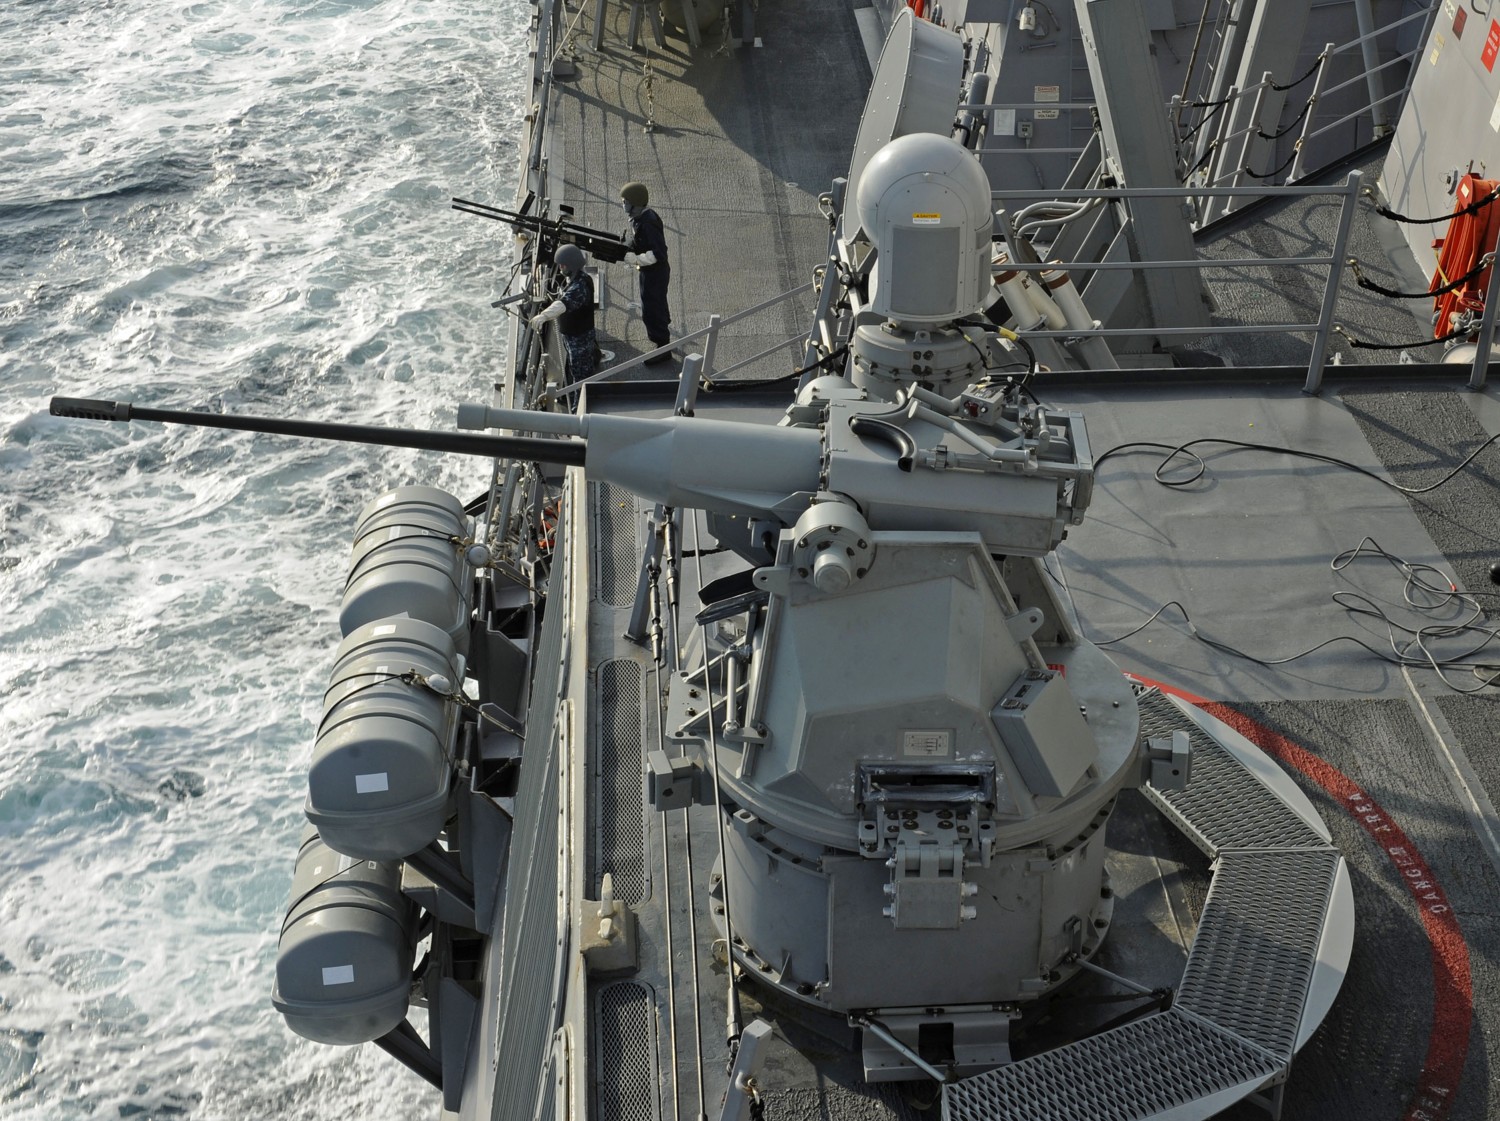 ddg-110 uss dewey arleigh burke class guided missile destroyer aegis us navy mk.38 machine gun system mgs 36